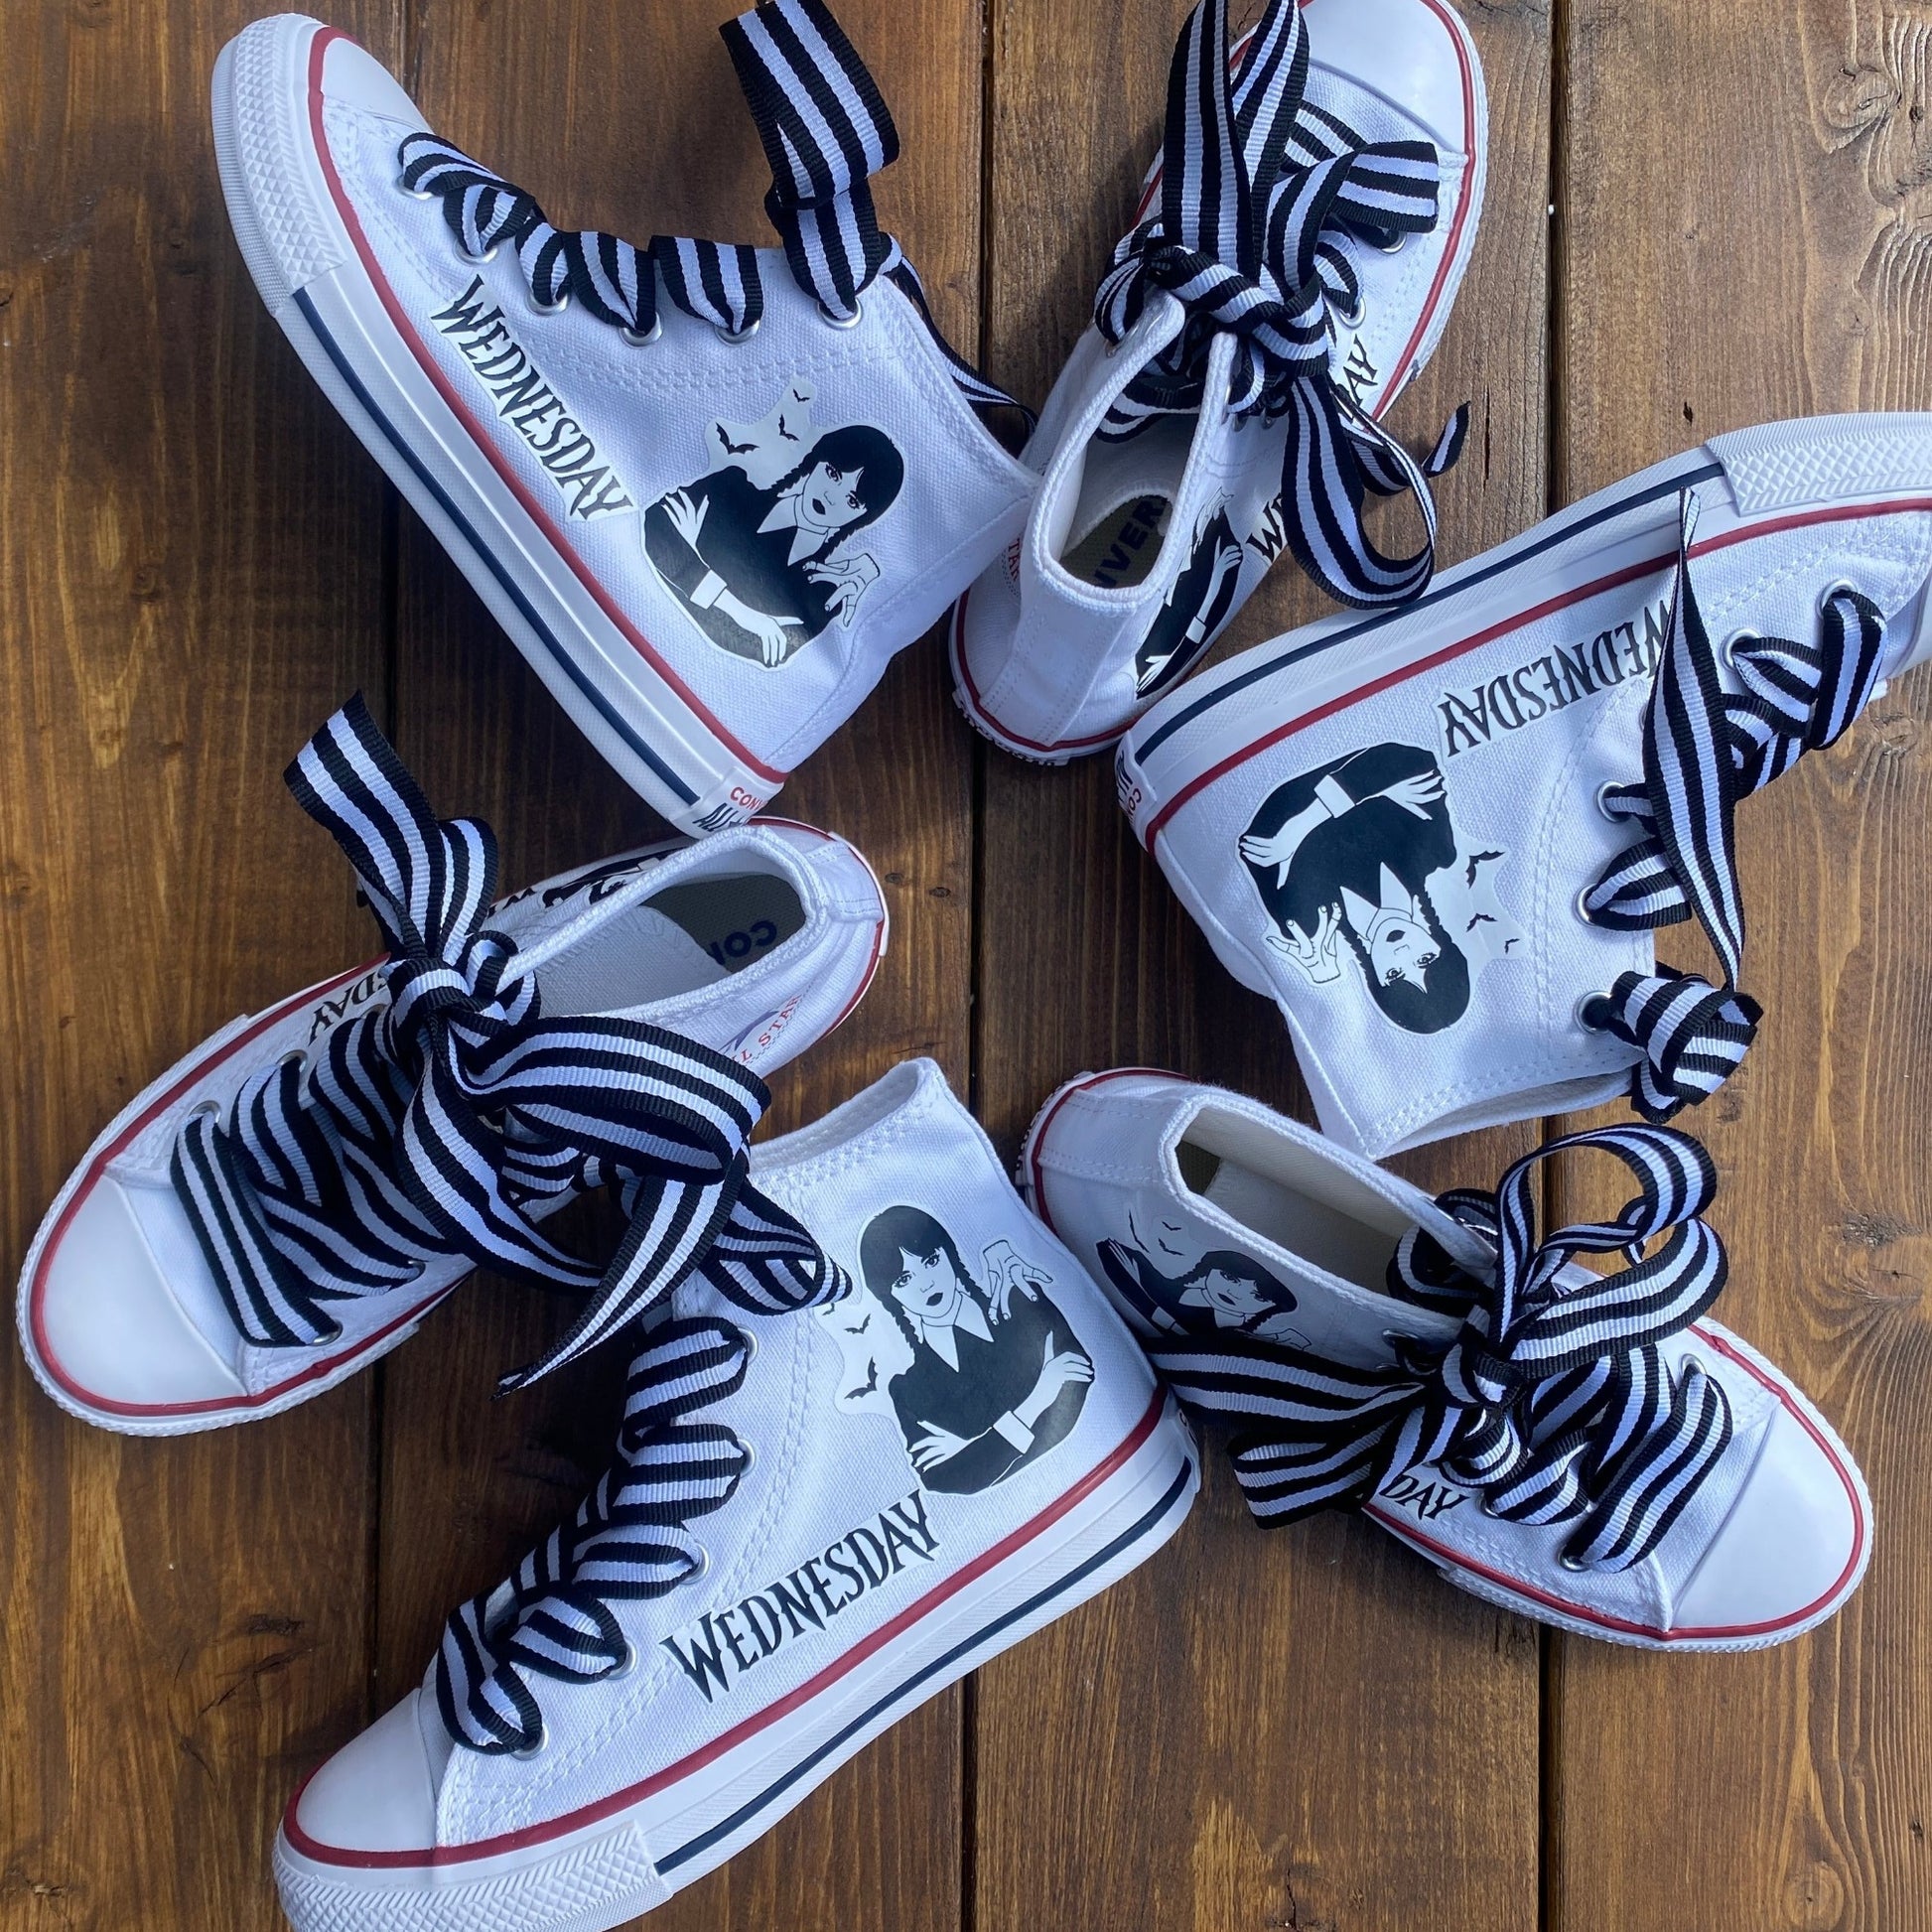 custom converse shoes